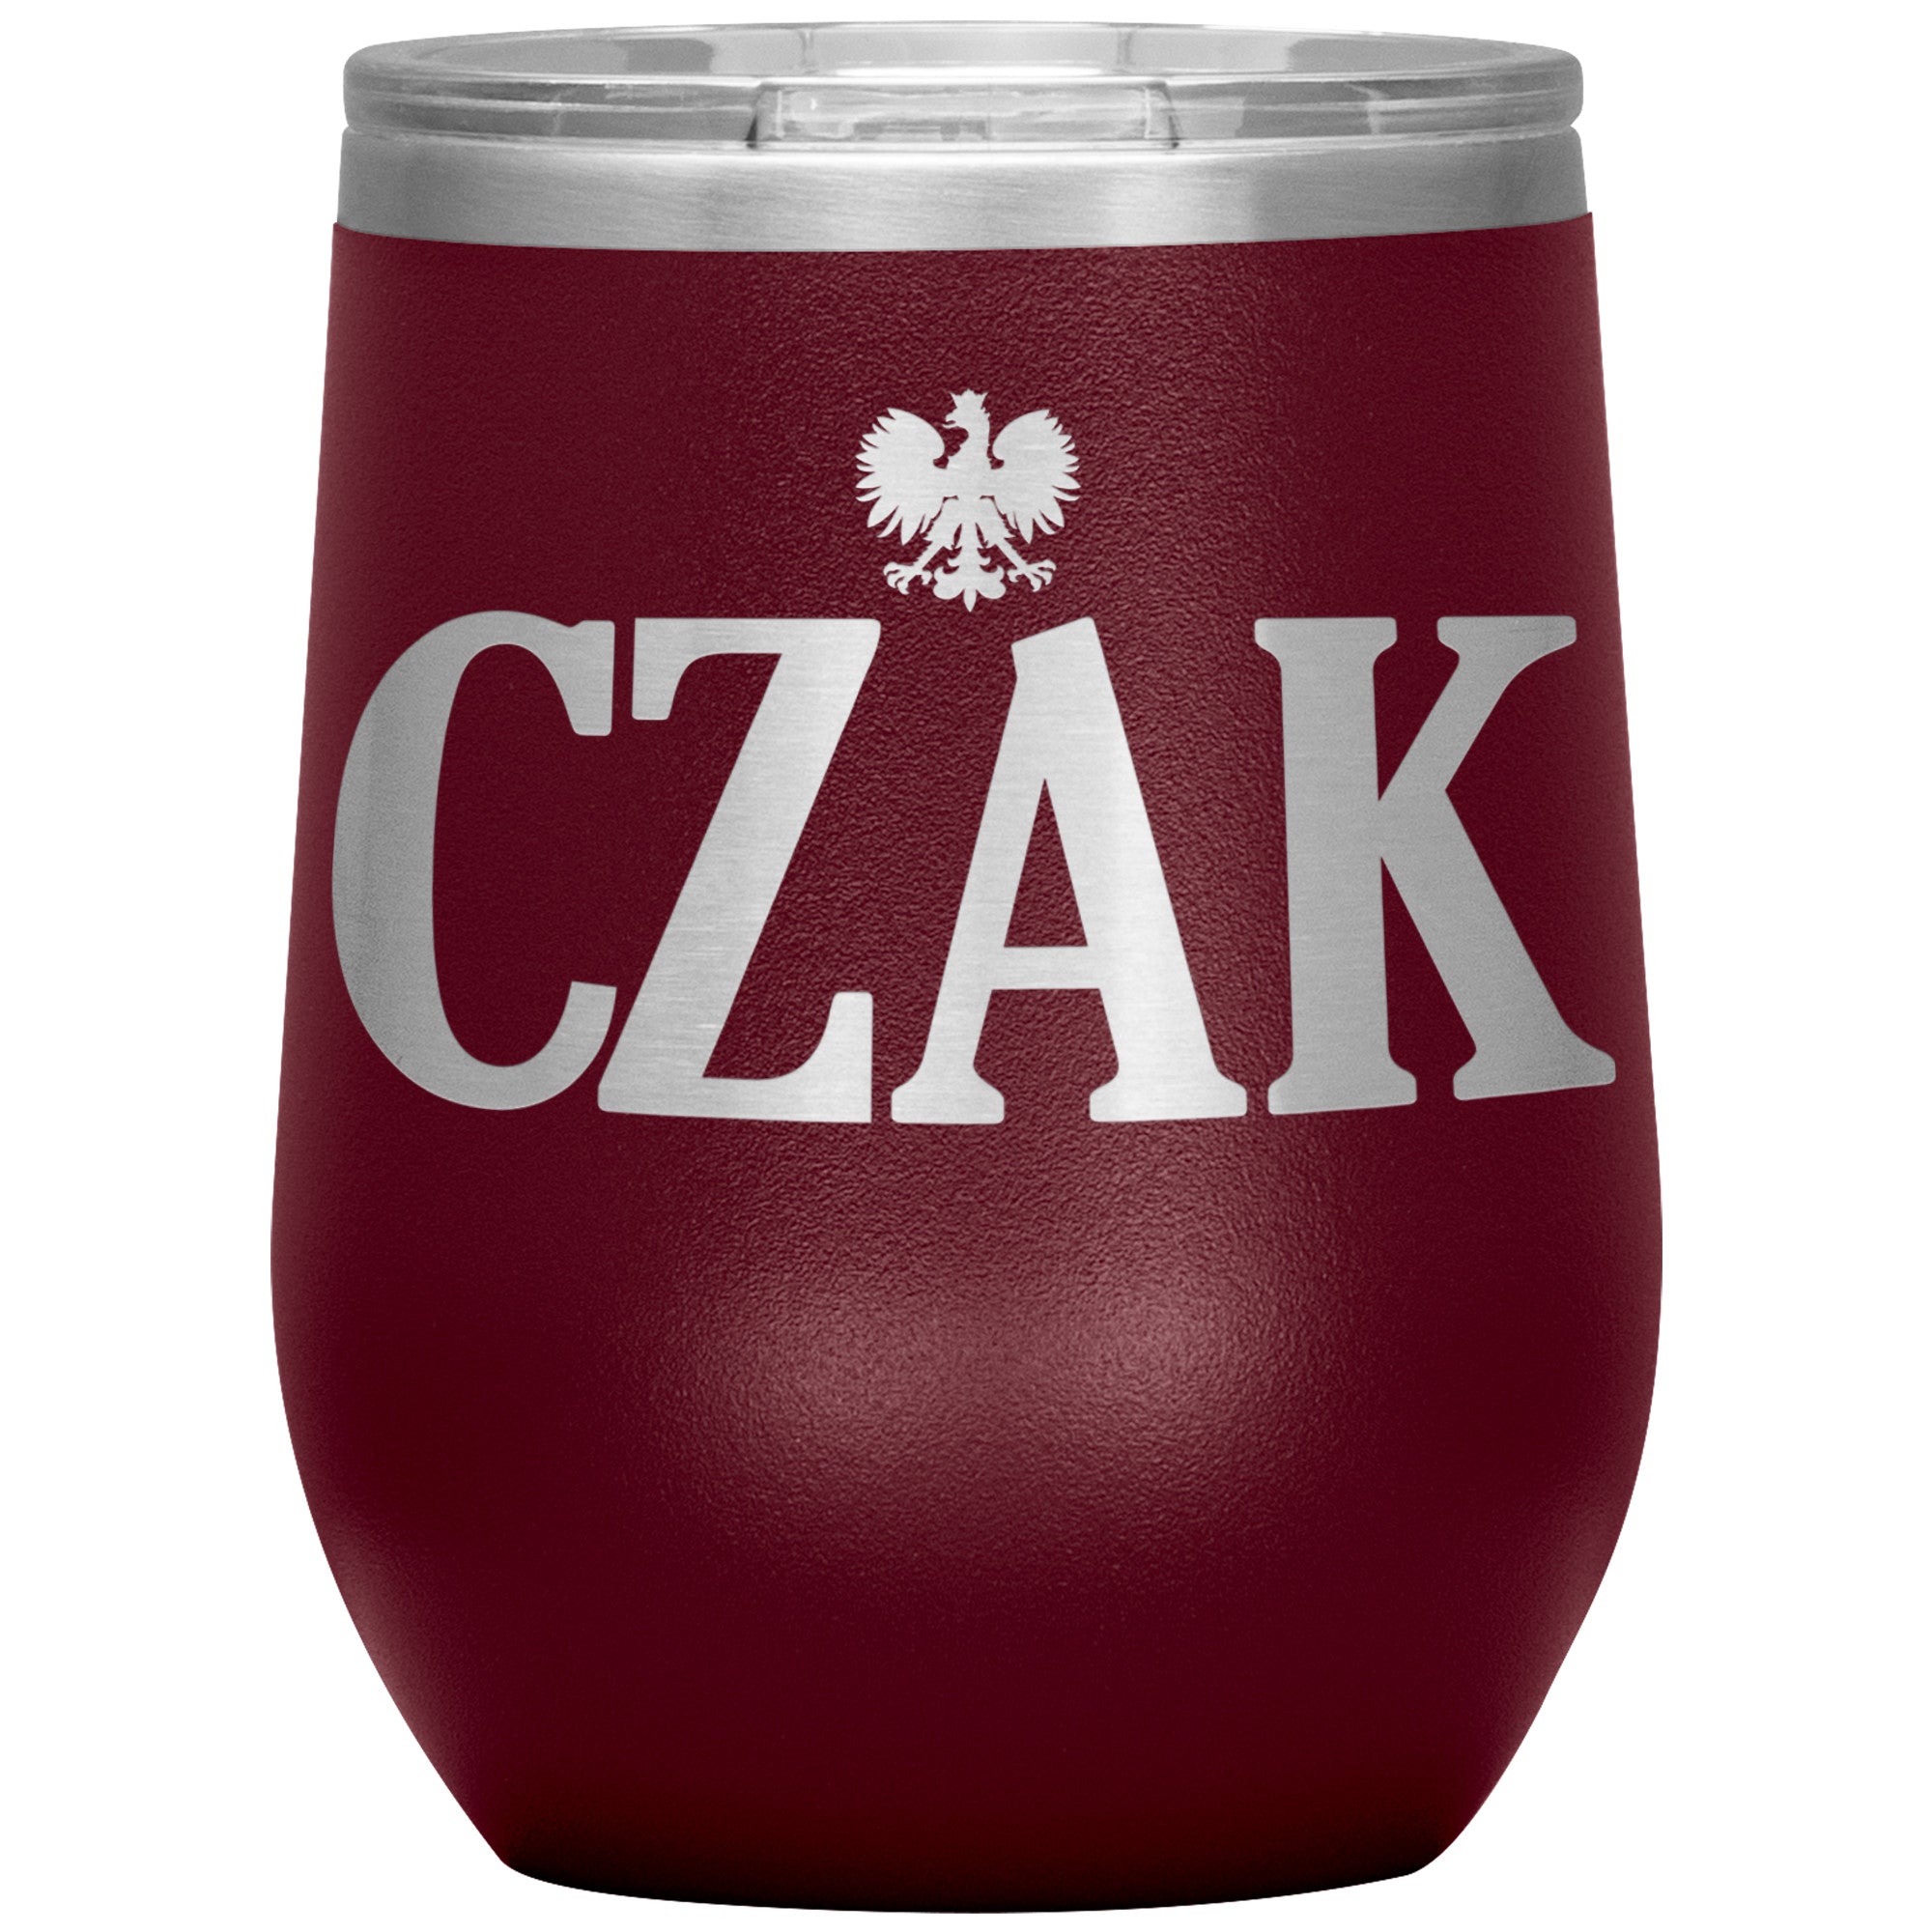 Polish Surnames Ending In CZAK Insulated Wine Tumbler Tumblers teelaunch Maroon  